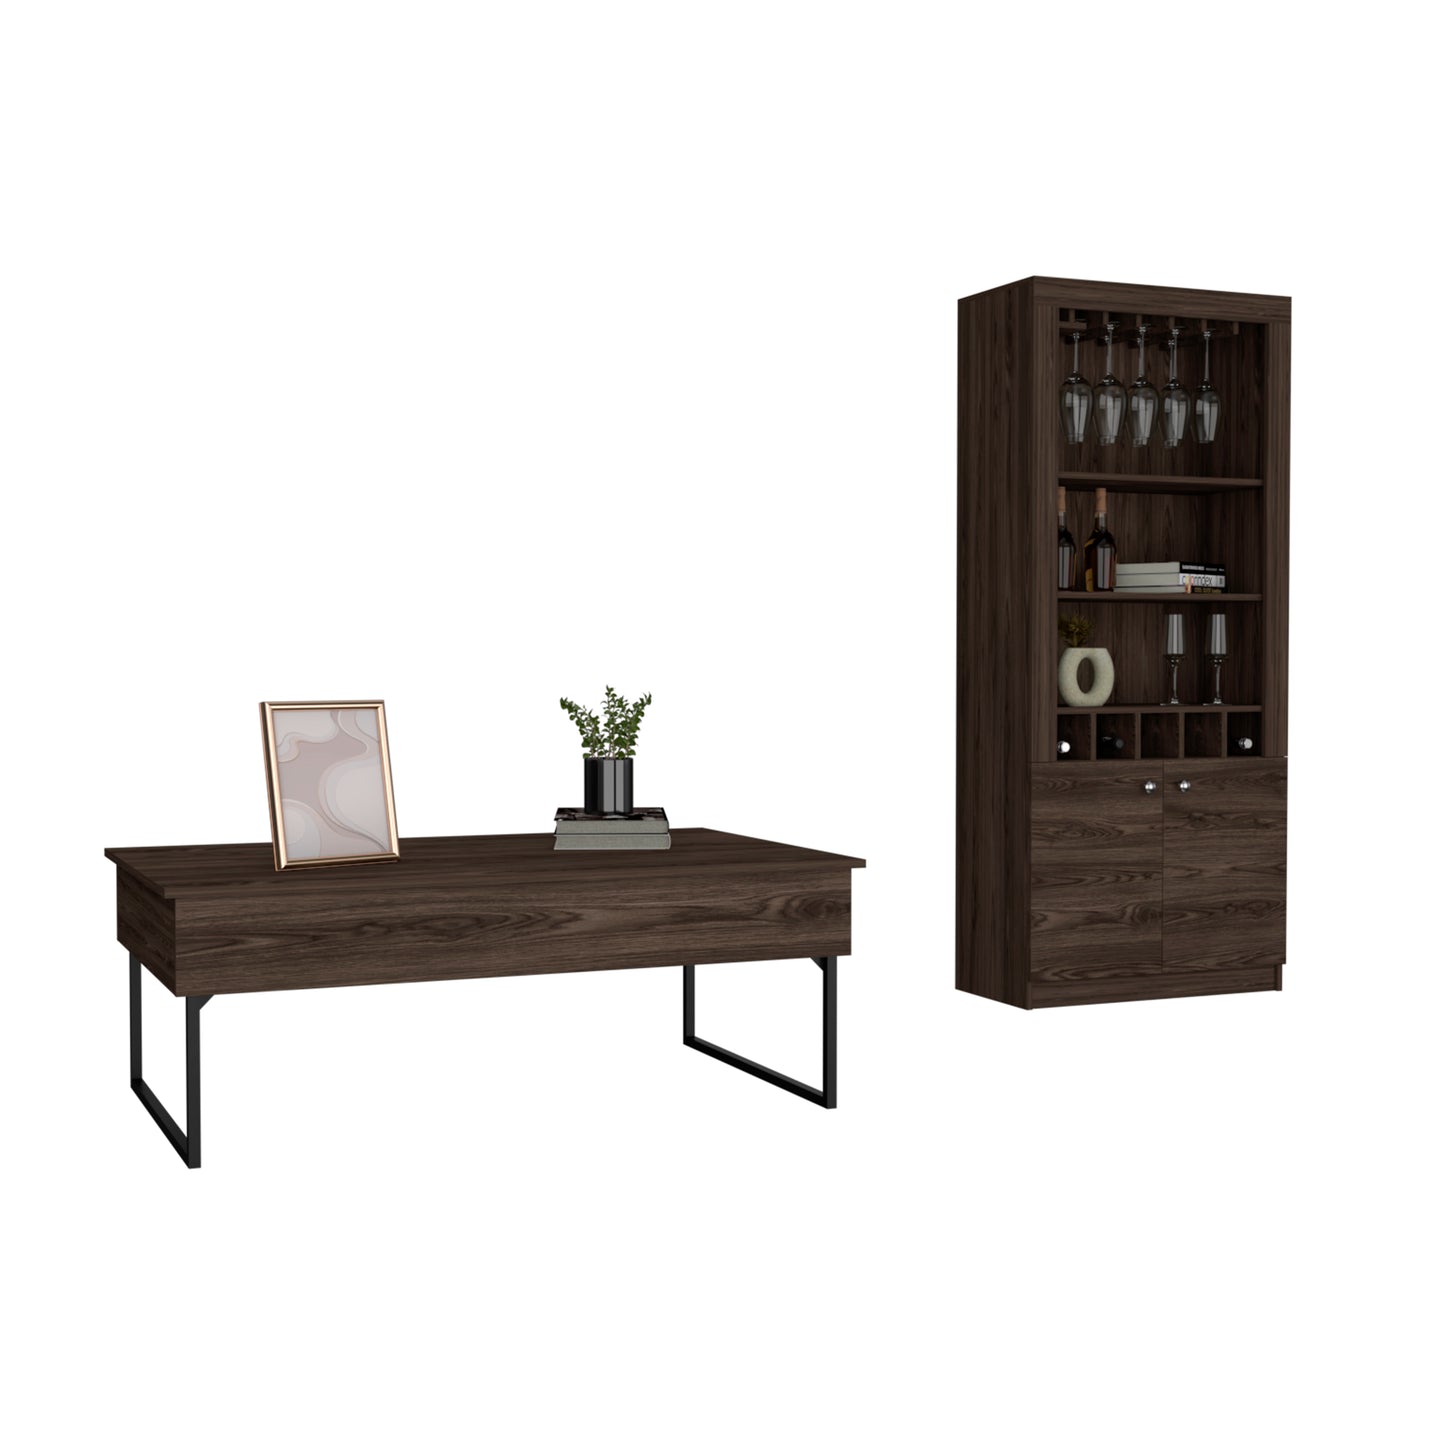 Palermo 2 Piece Living Room Set, Bar Cabinet + Coffee Table, Dark Walnut Finish